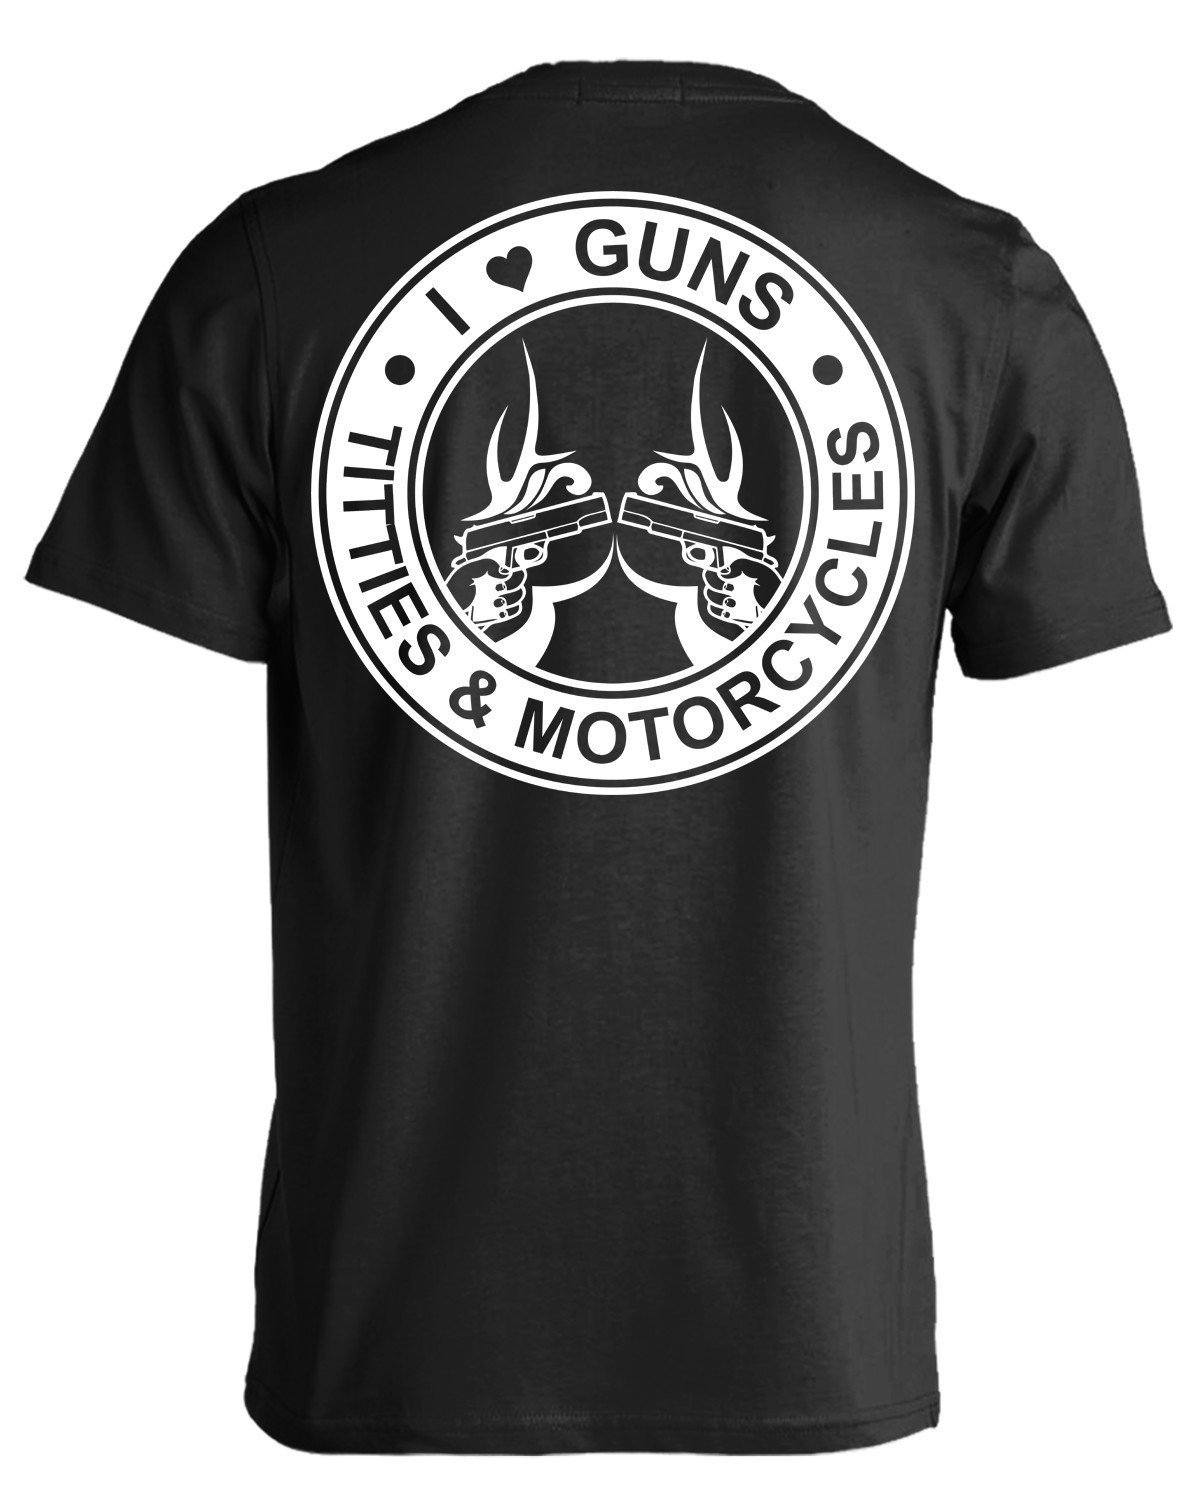 I Love Guns, Titties & Motorcycle T-Shirt - The Bikers' Den